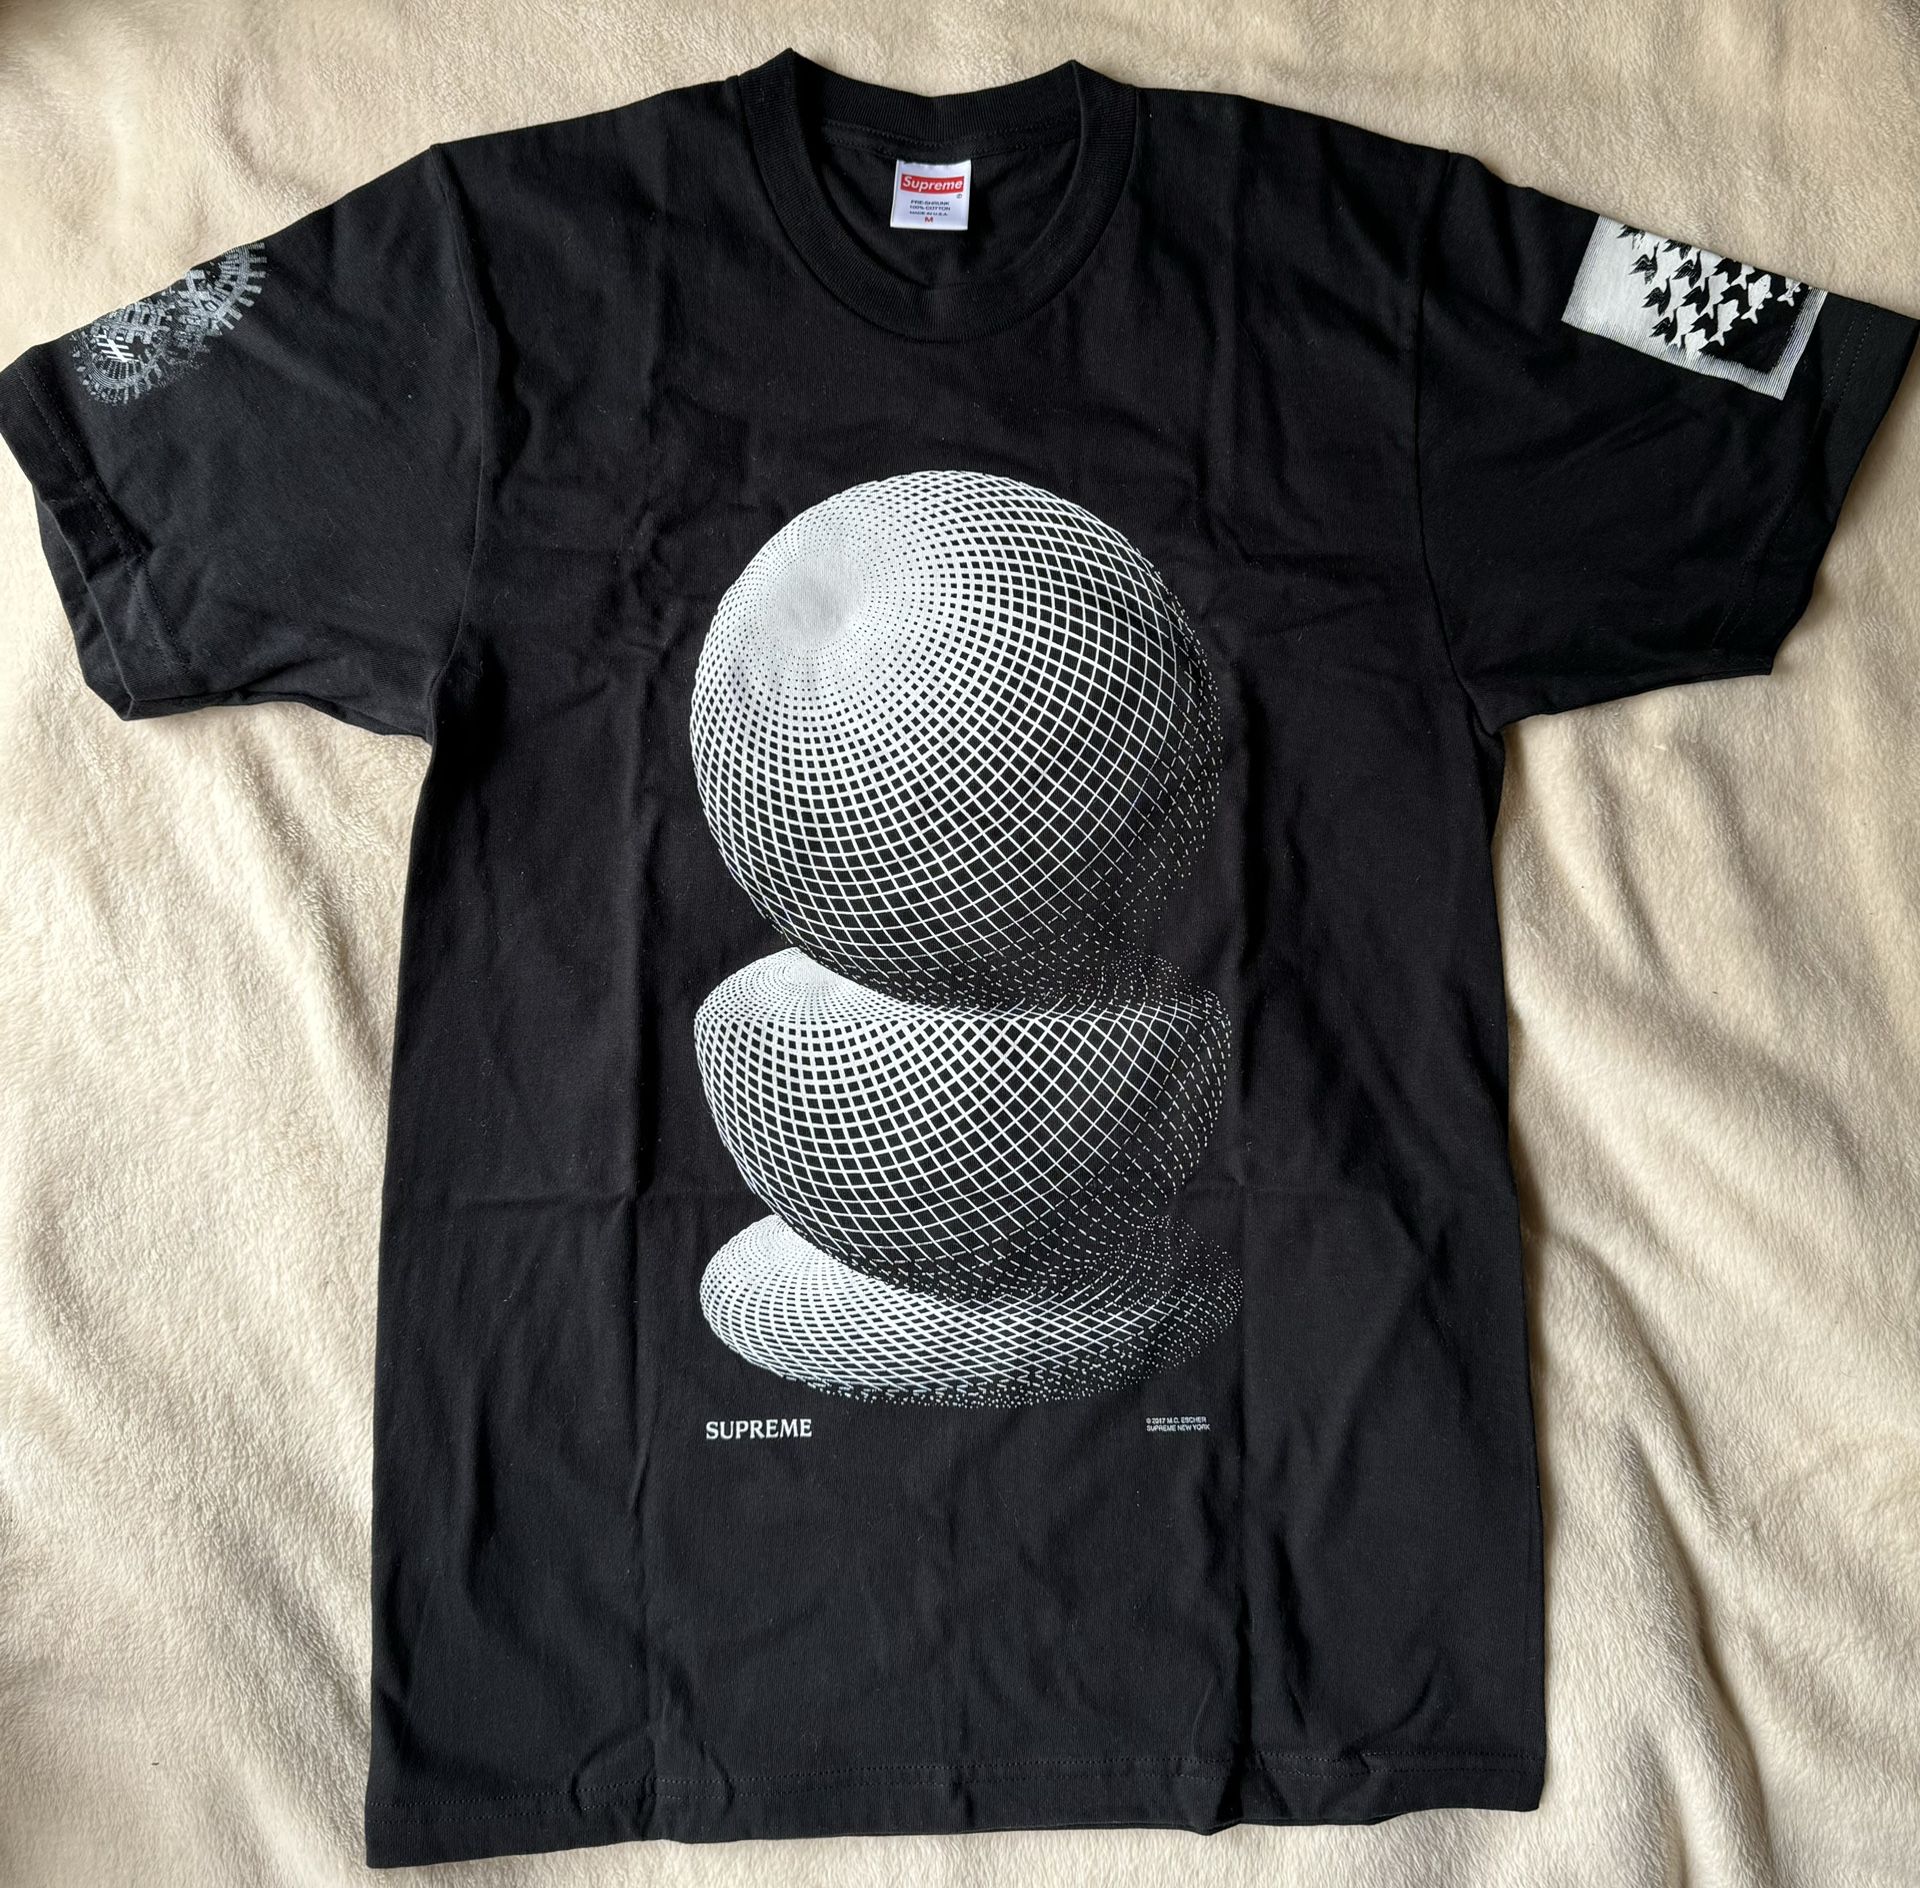 2017 Black Supreme M.C Escher Three Spheres Tee - M